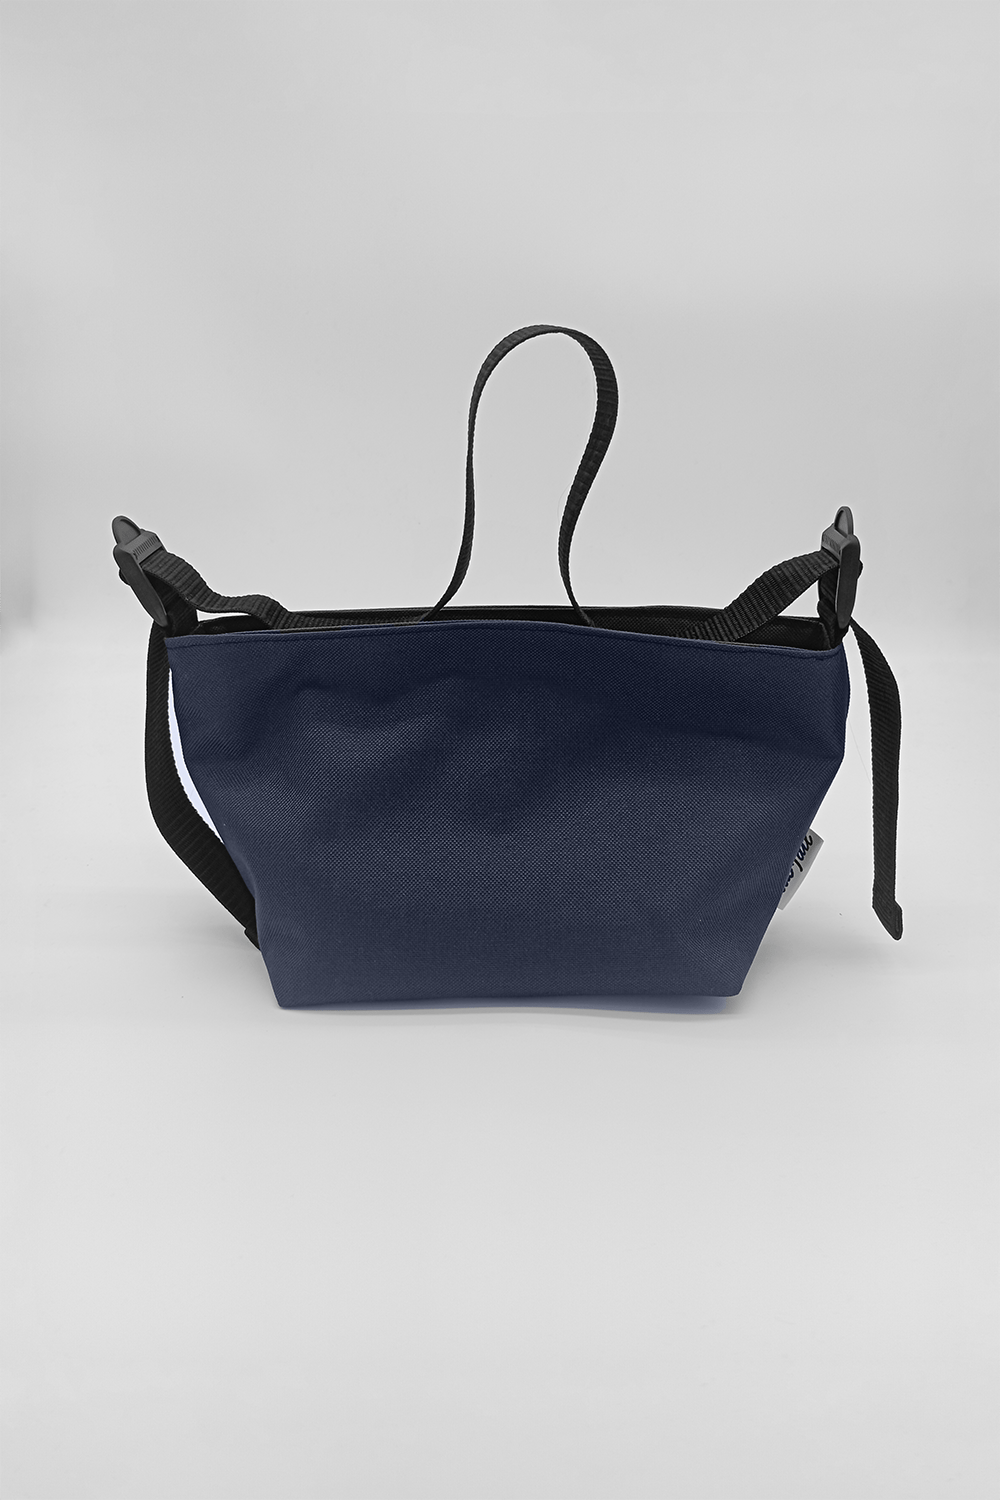 Image of CLOE - mini bag navy 